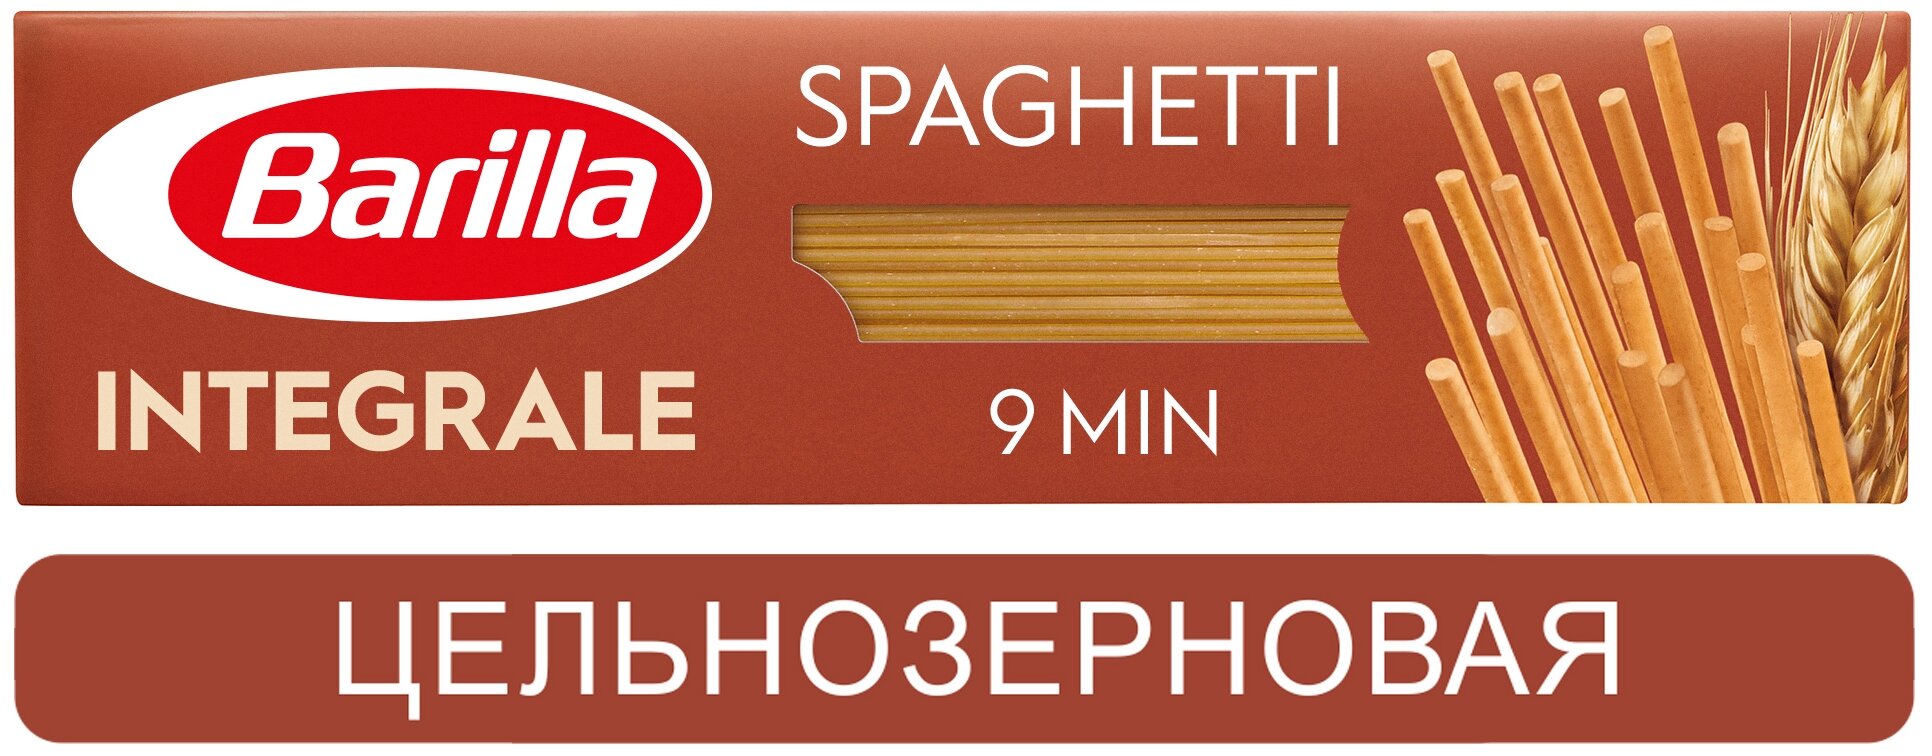 Barilla Spaghetti Integrale n.5 Паста спагетти цельнозерновые, 500 г - фотография № 2